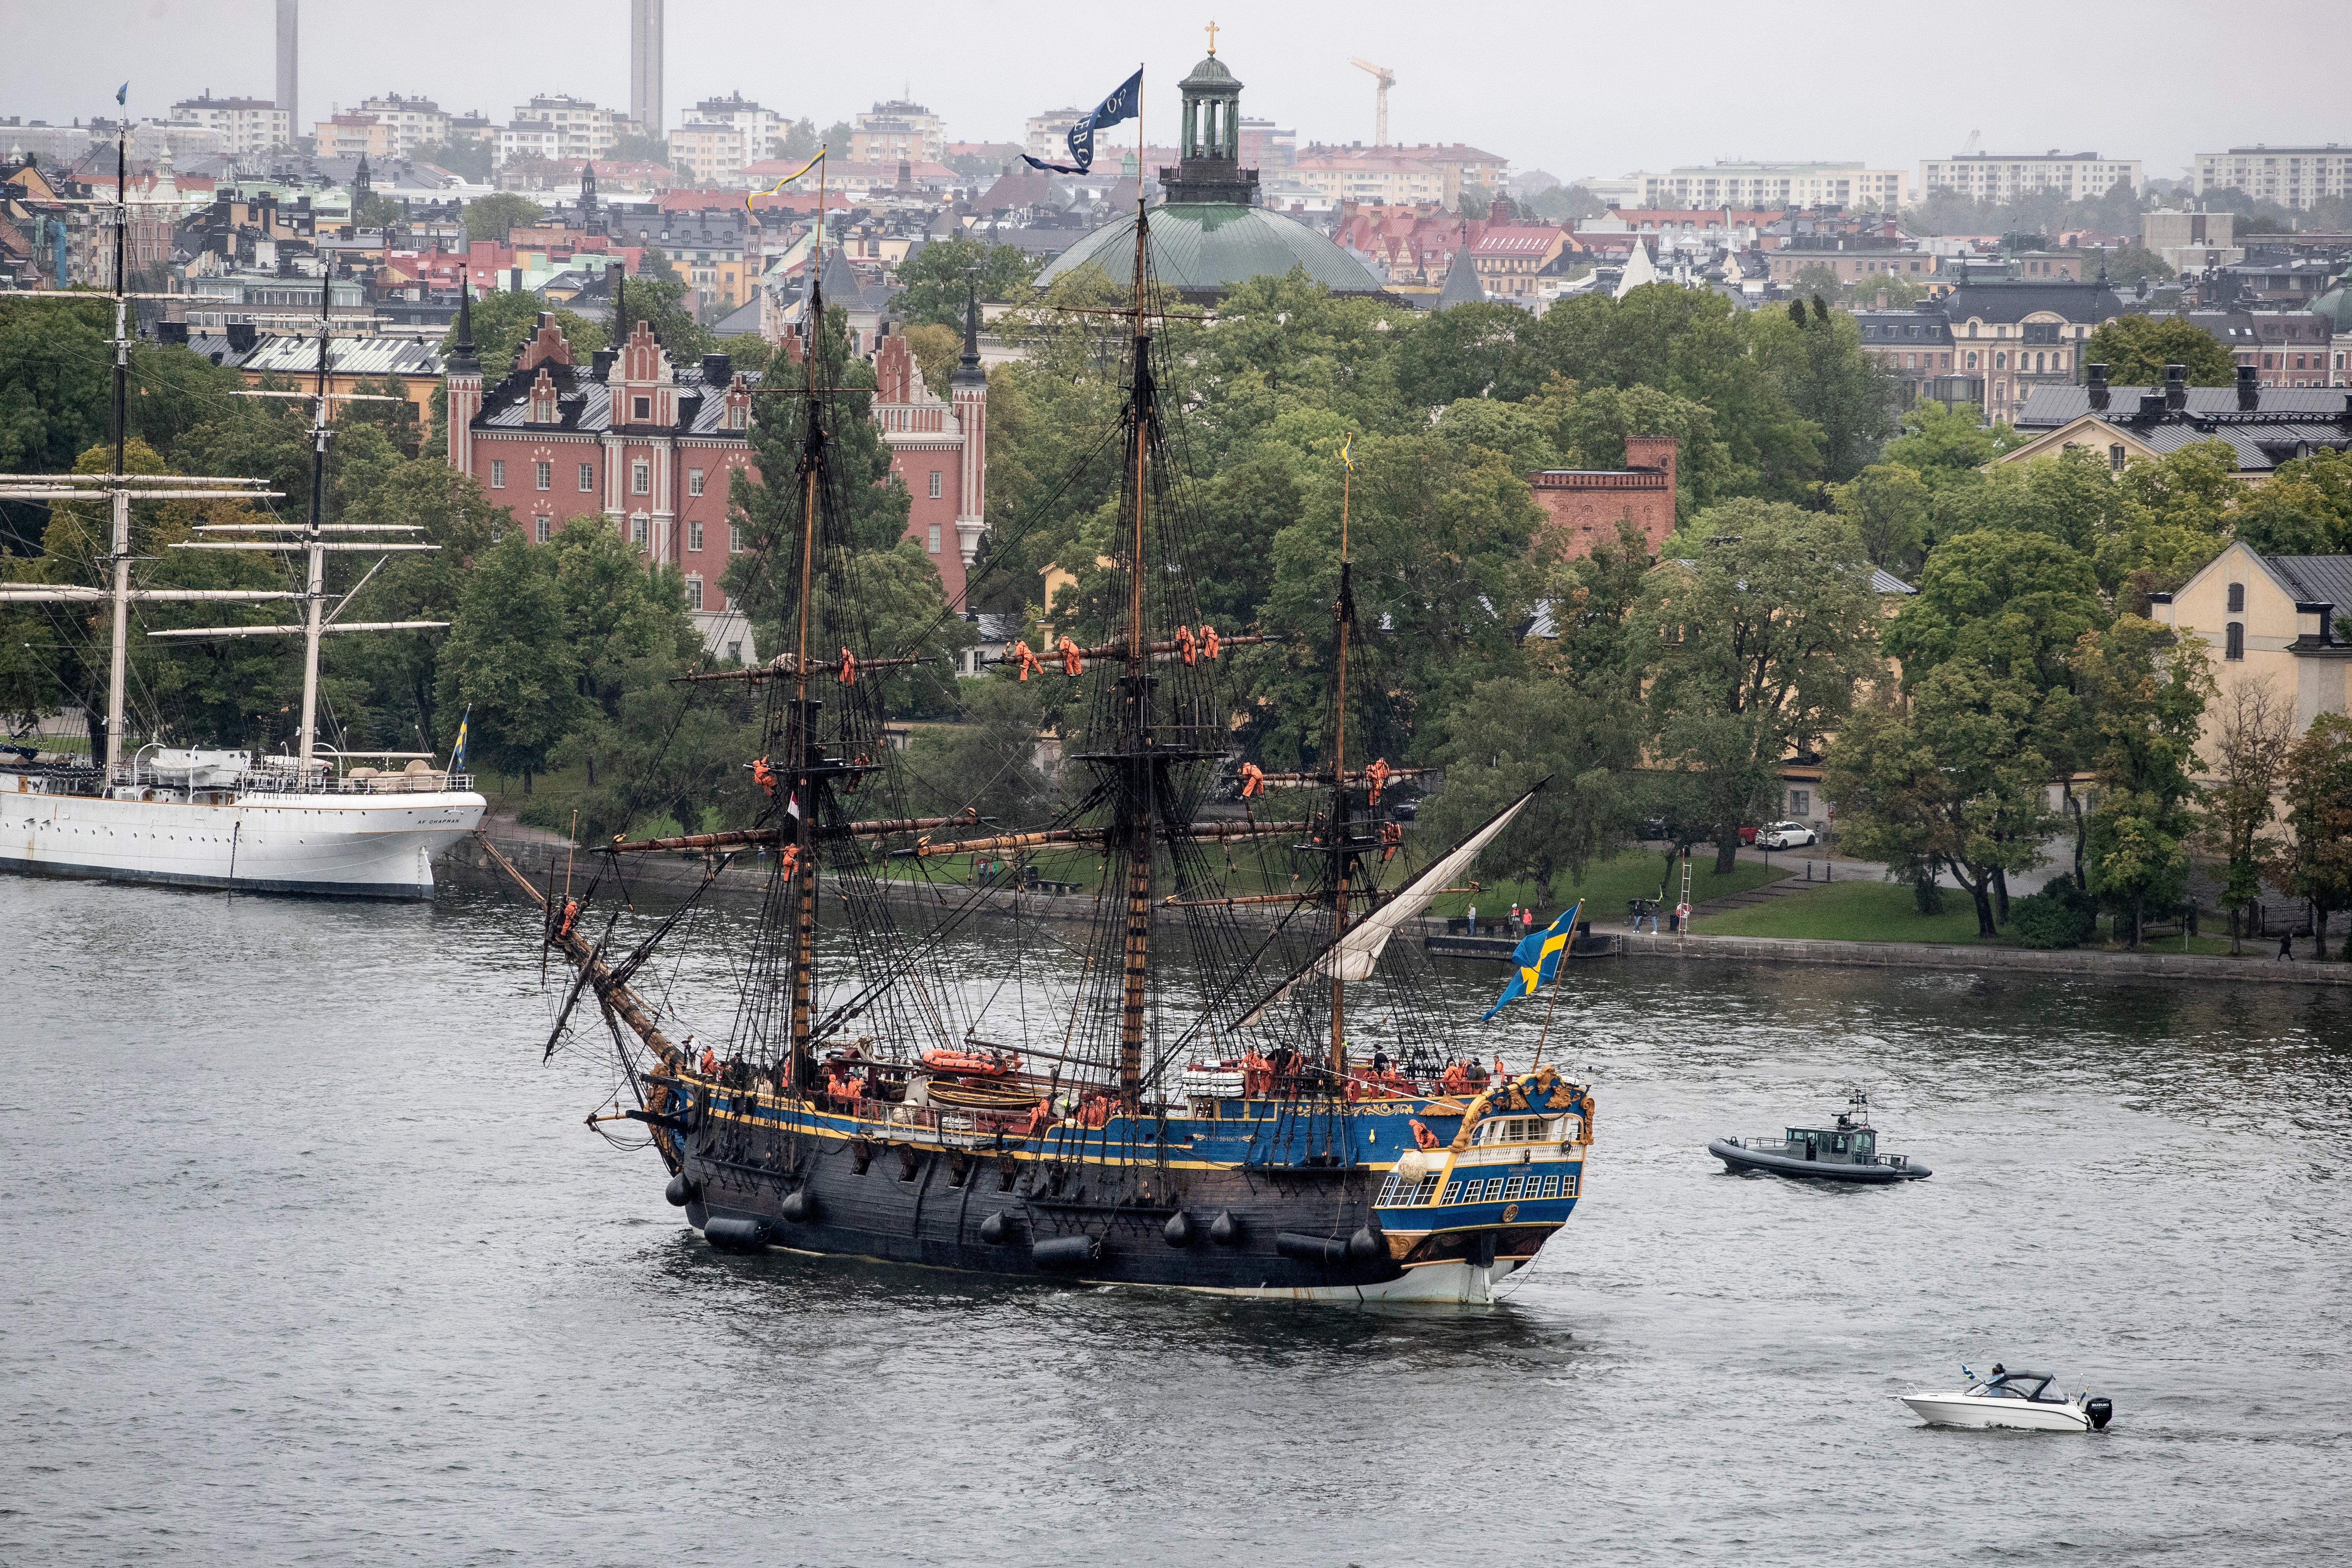 Visit the Götheborg – a Swedish tall sailing ship